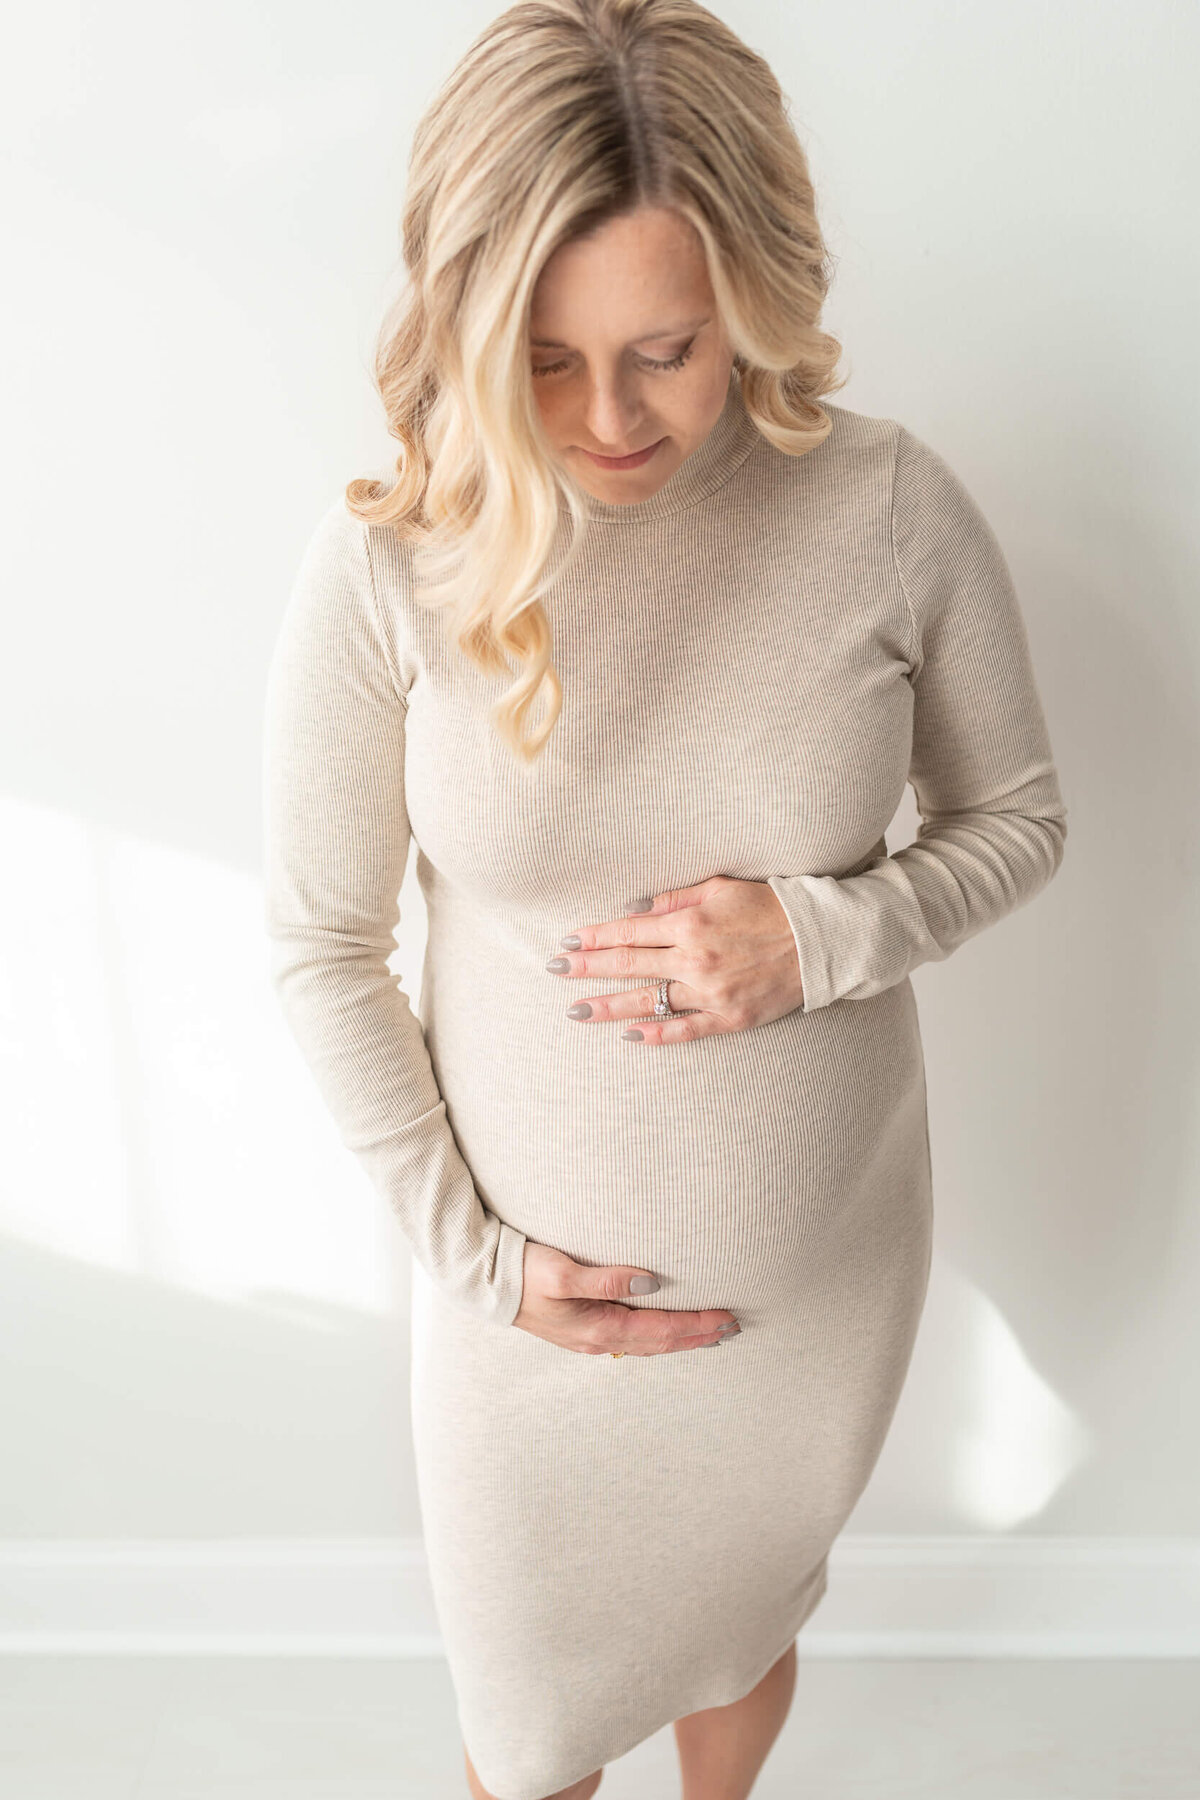 maternity-photographer-columbus-ohio-brynn-burke-photography-12